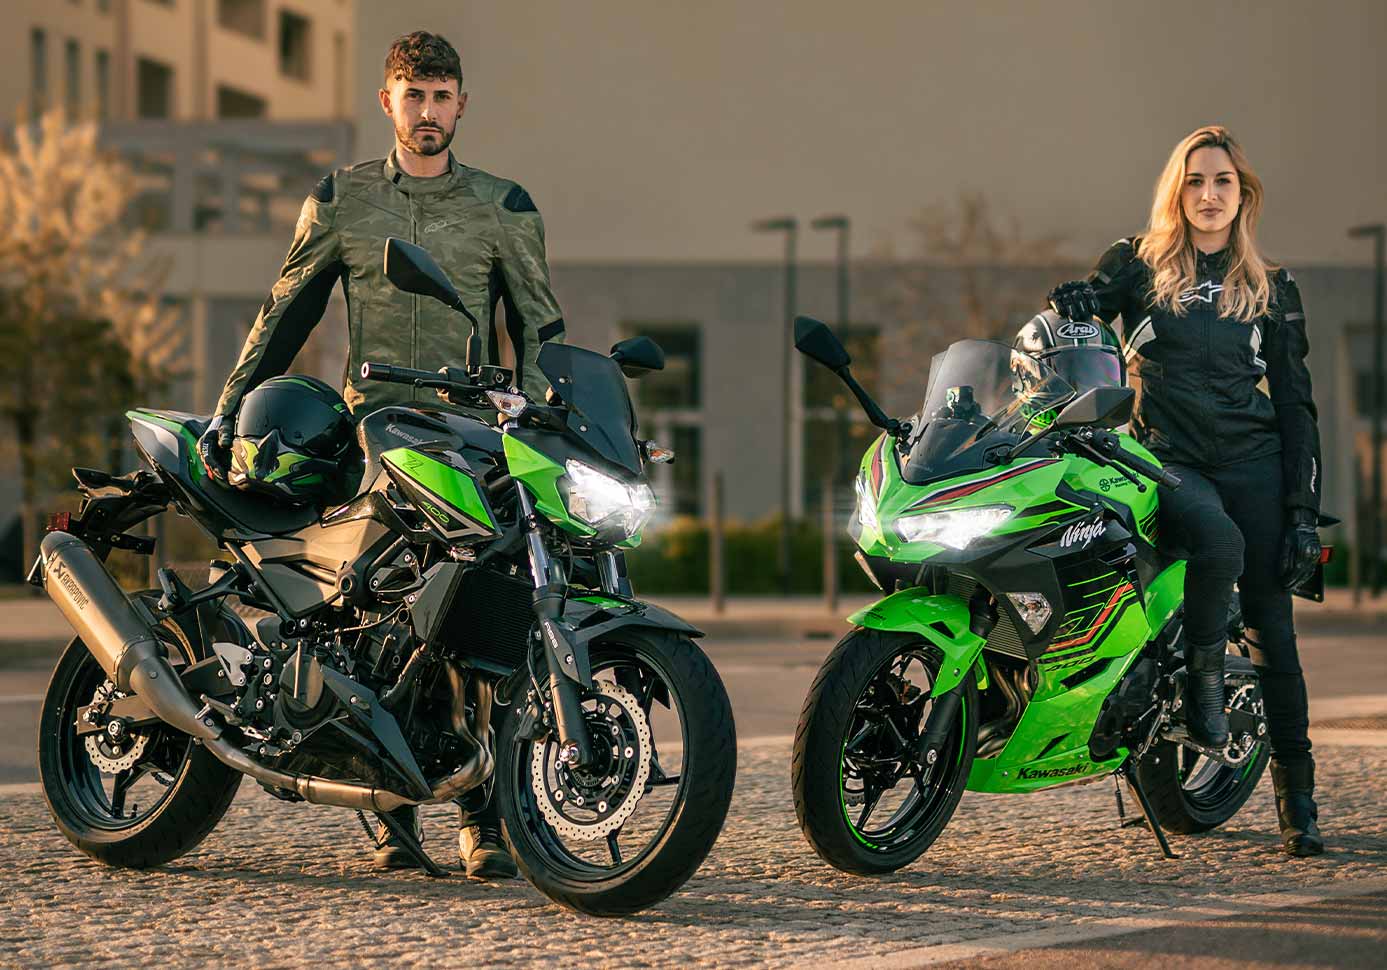 The all-new Kawasaki 400cc range - Z400 and Ninja 400